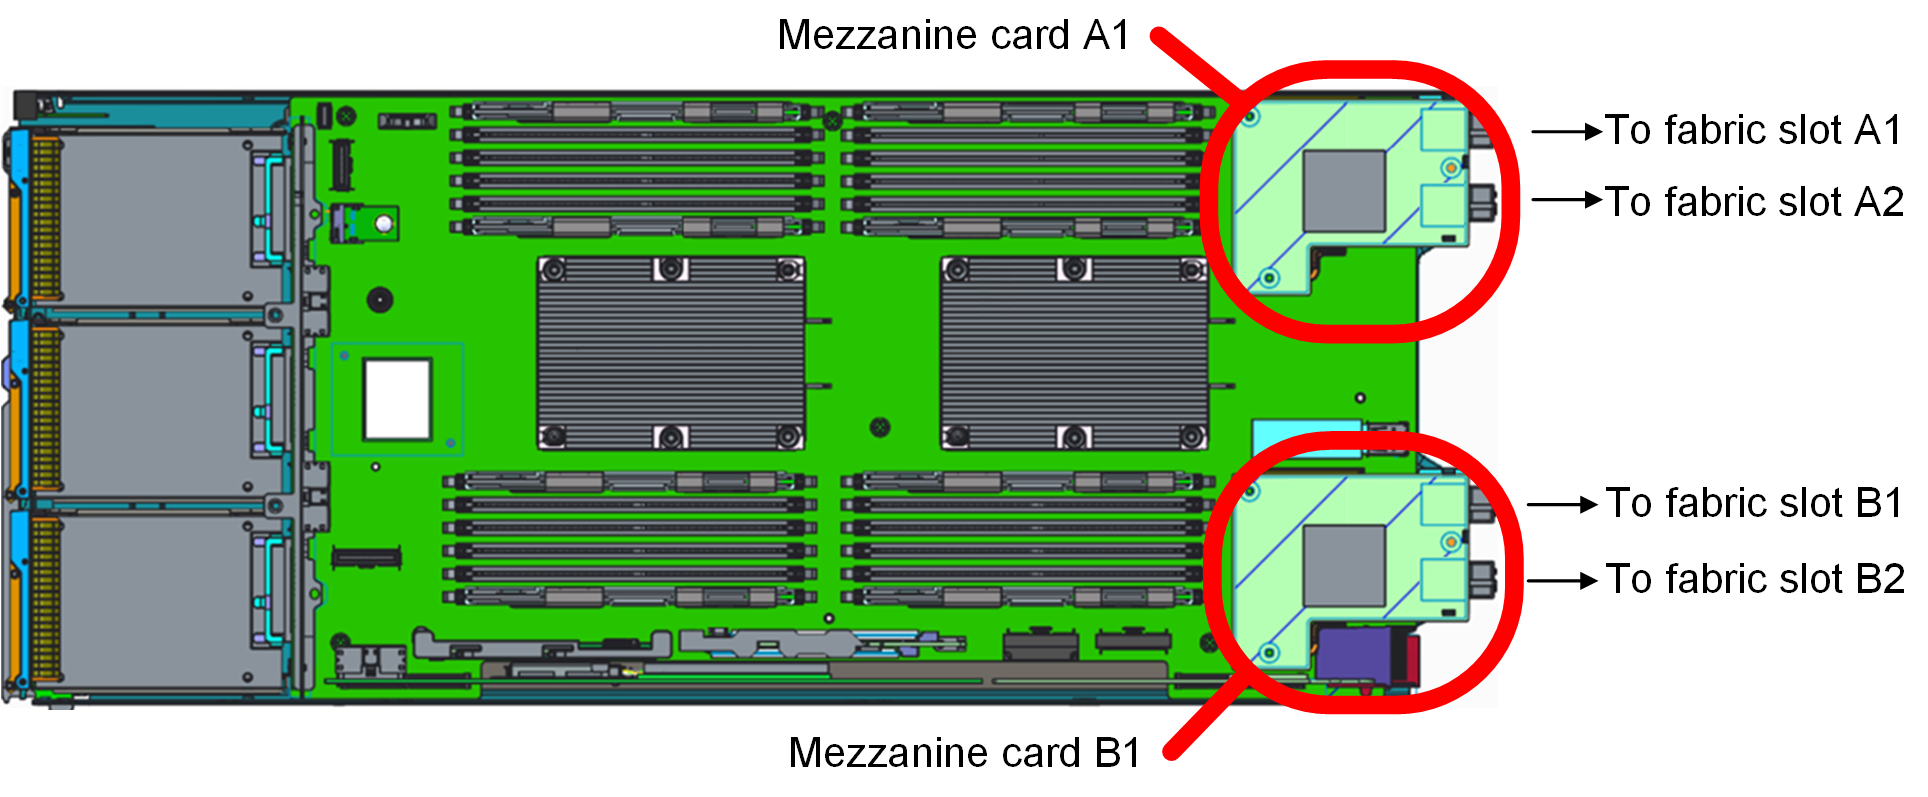 MX740c mezzanine cards